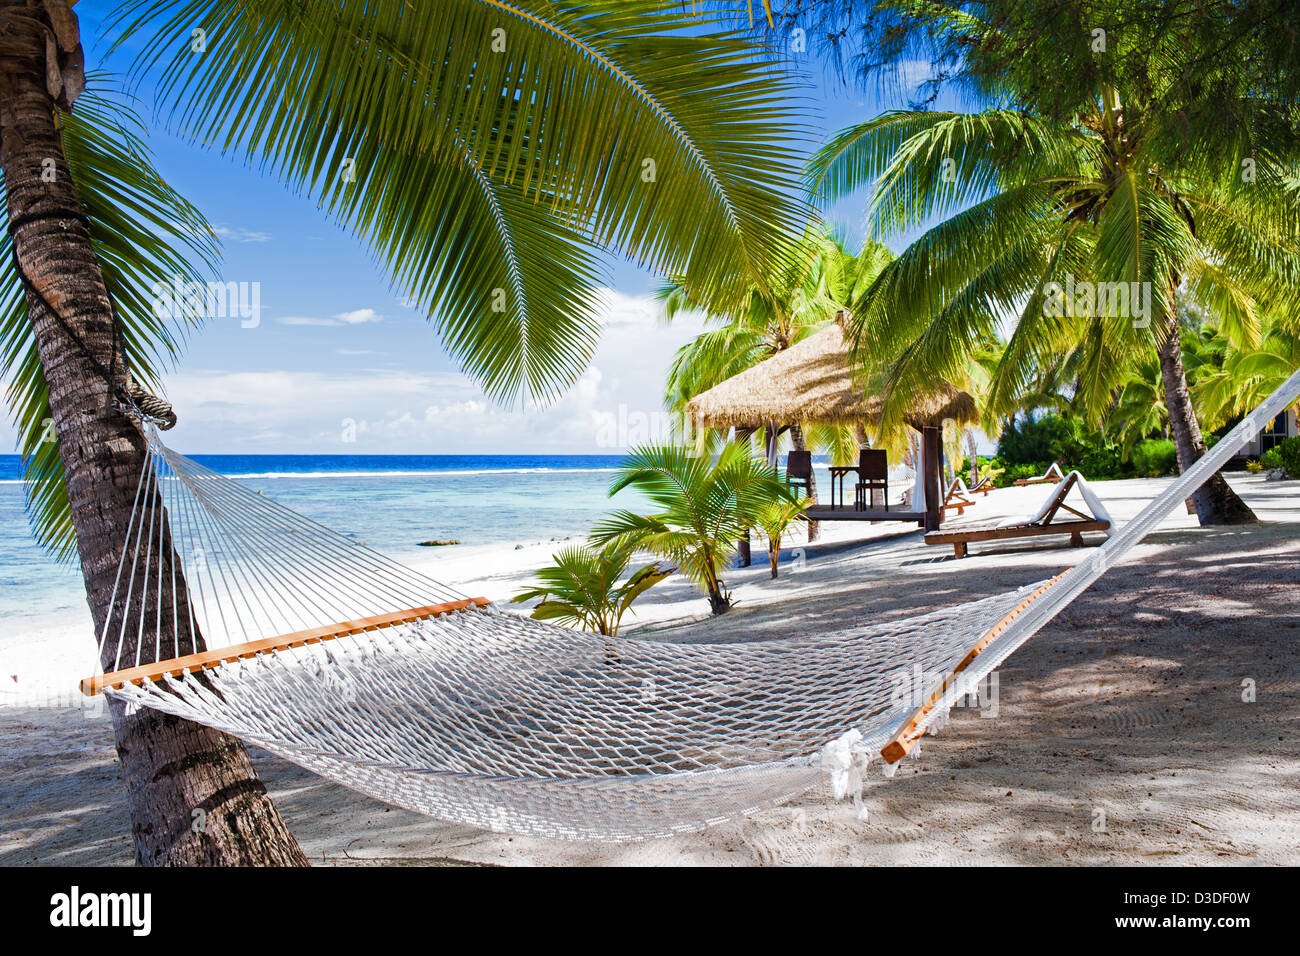 Empty hammock between palm trees on tropical beach Stock Photo